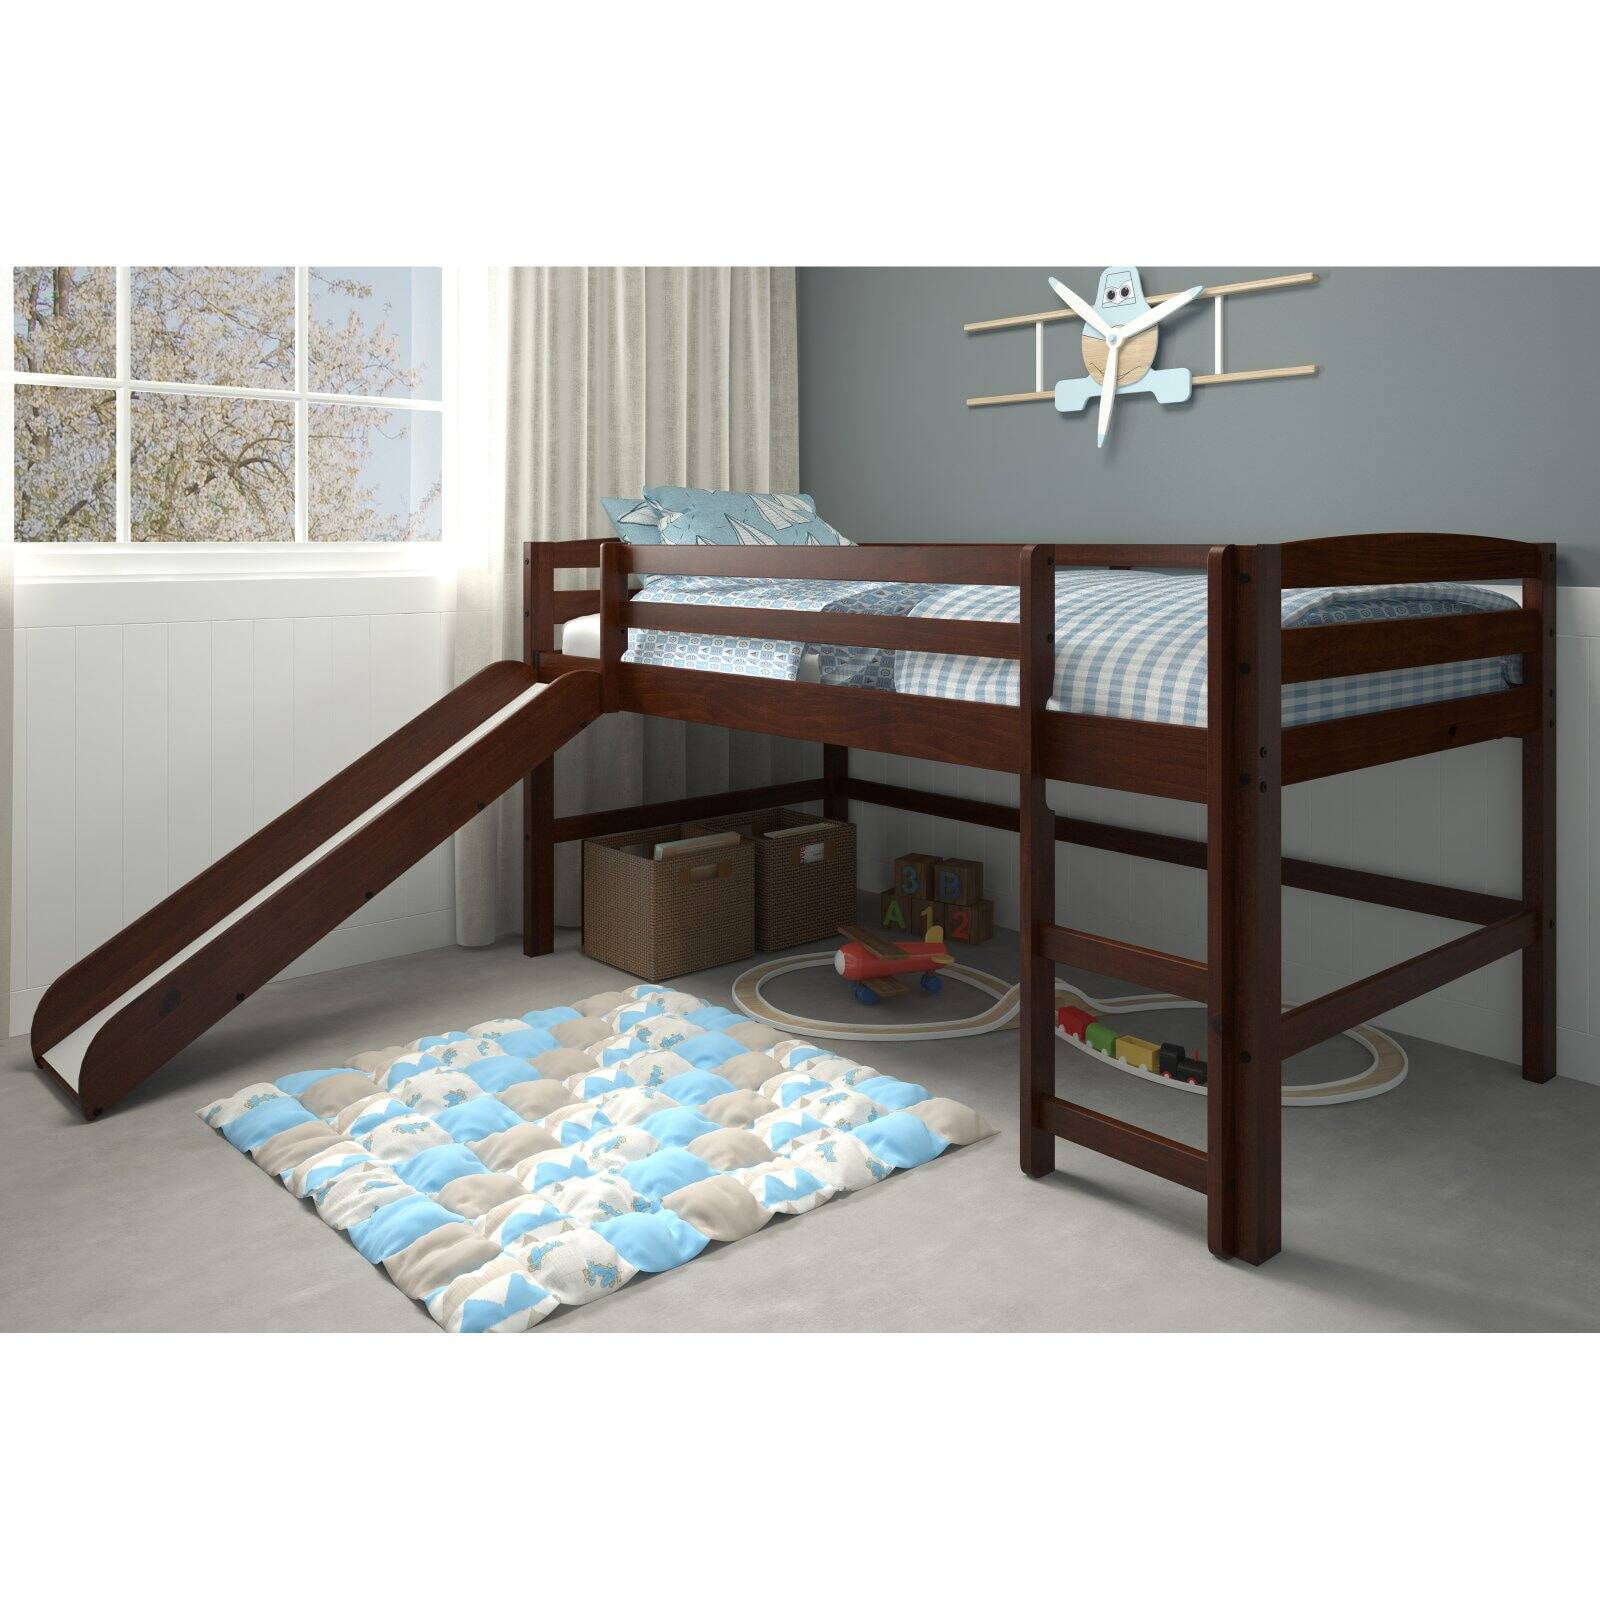 Woodcrest Pine Wood Loft Bed Storage, Chocolate Bunk Beds